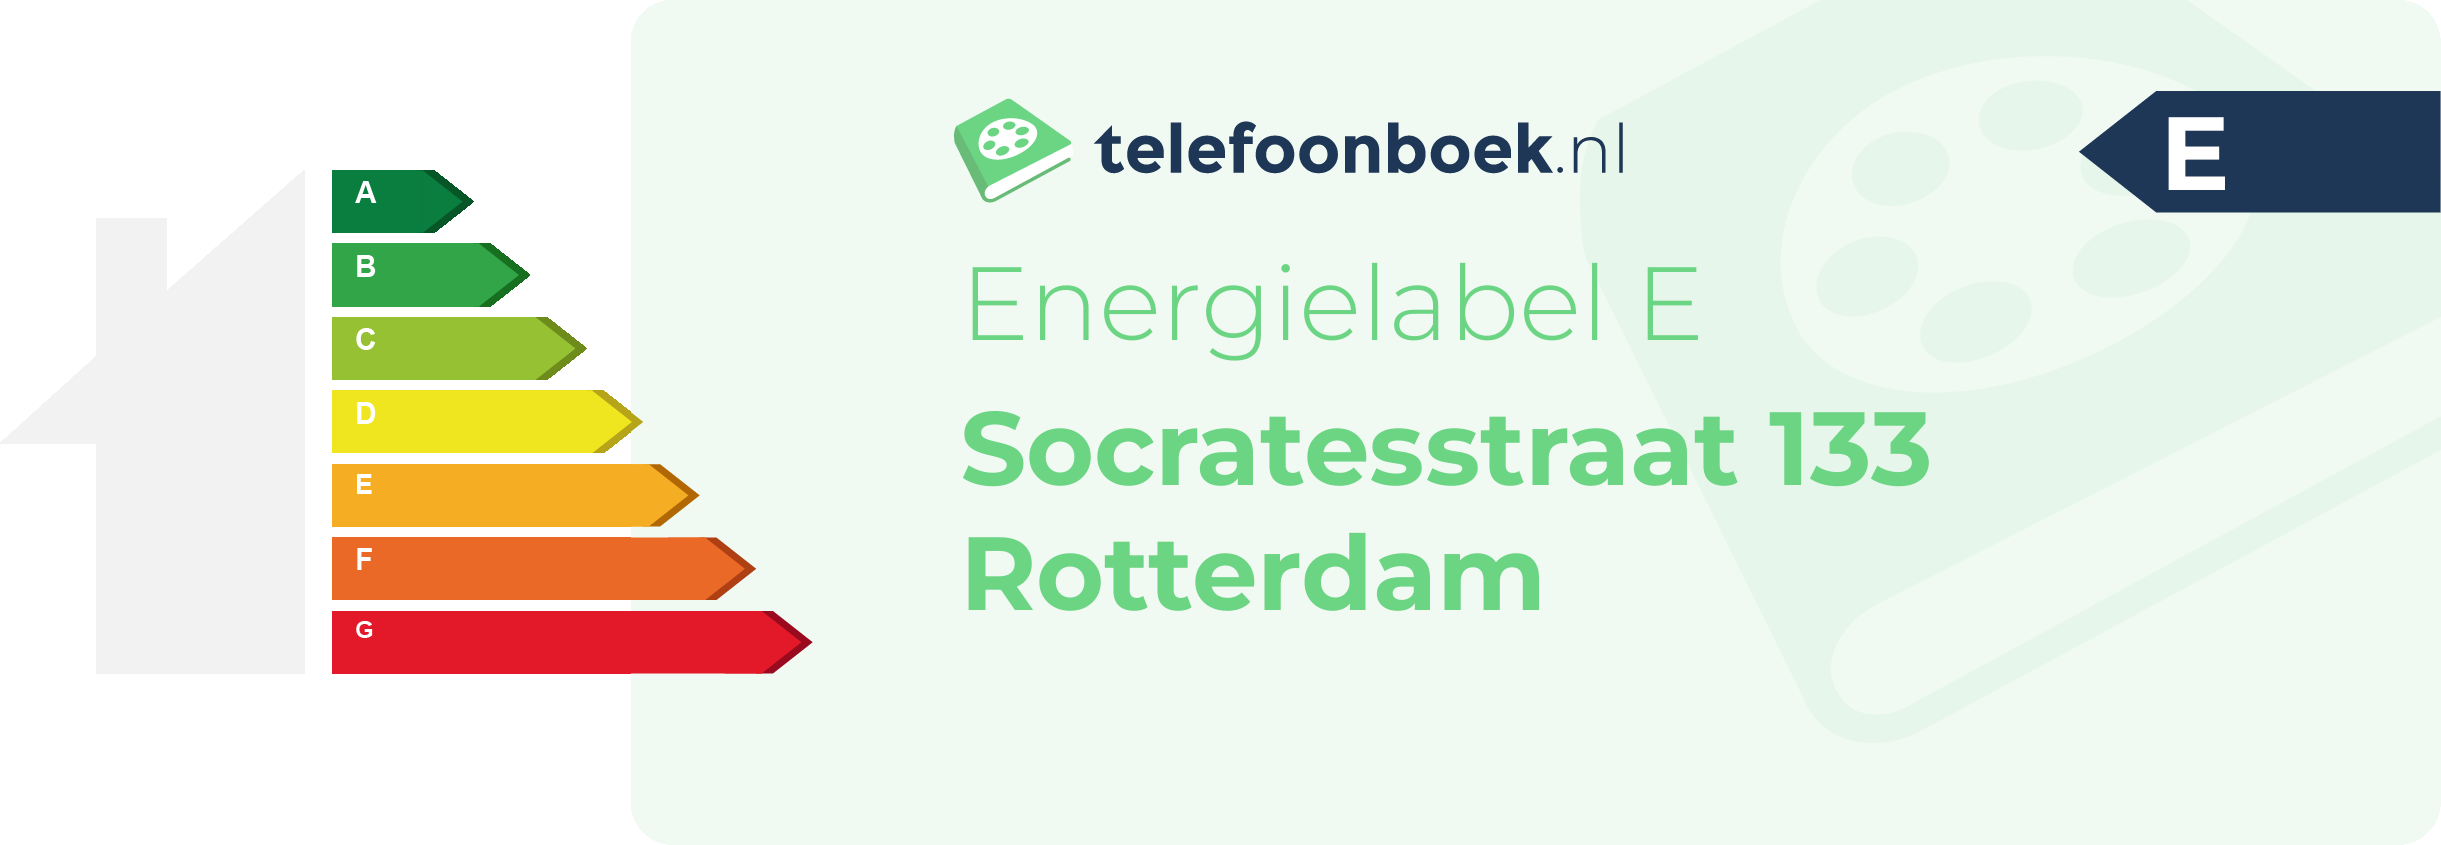 Energielabel Socratesstraat 133 Rotterdam